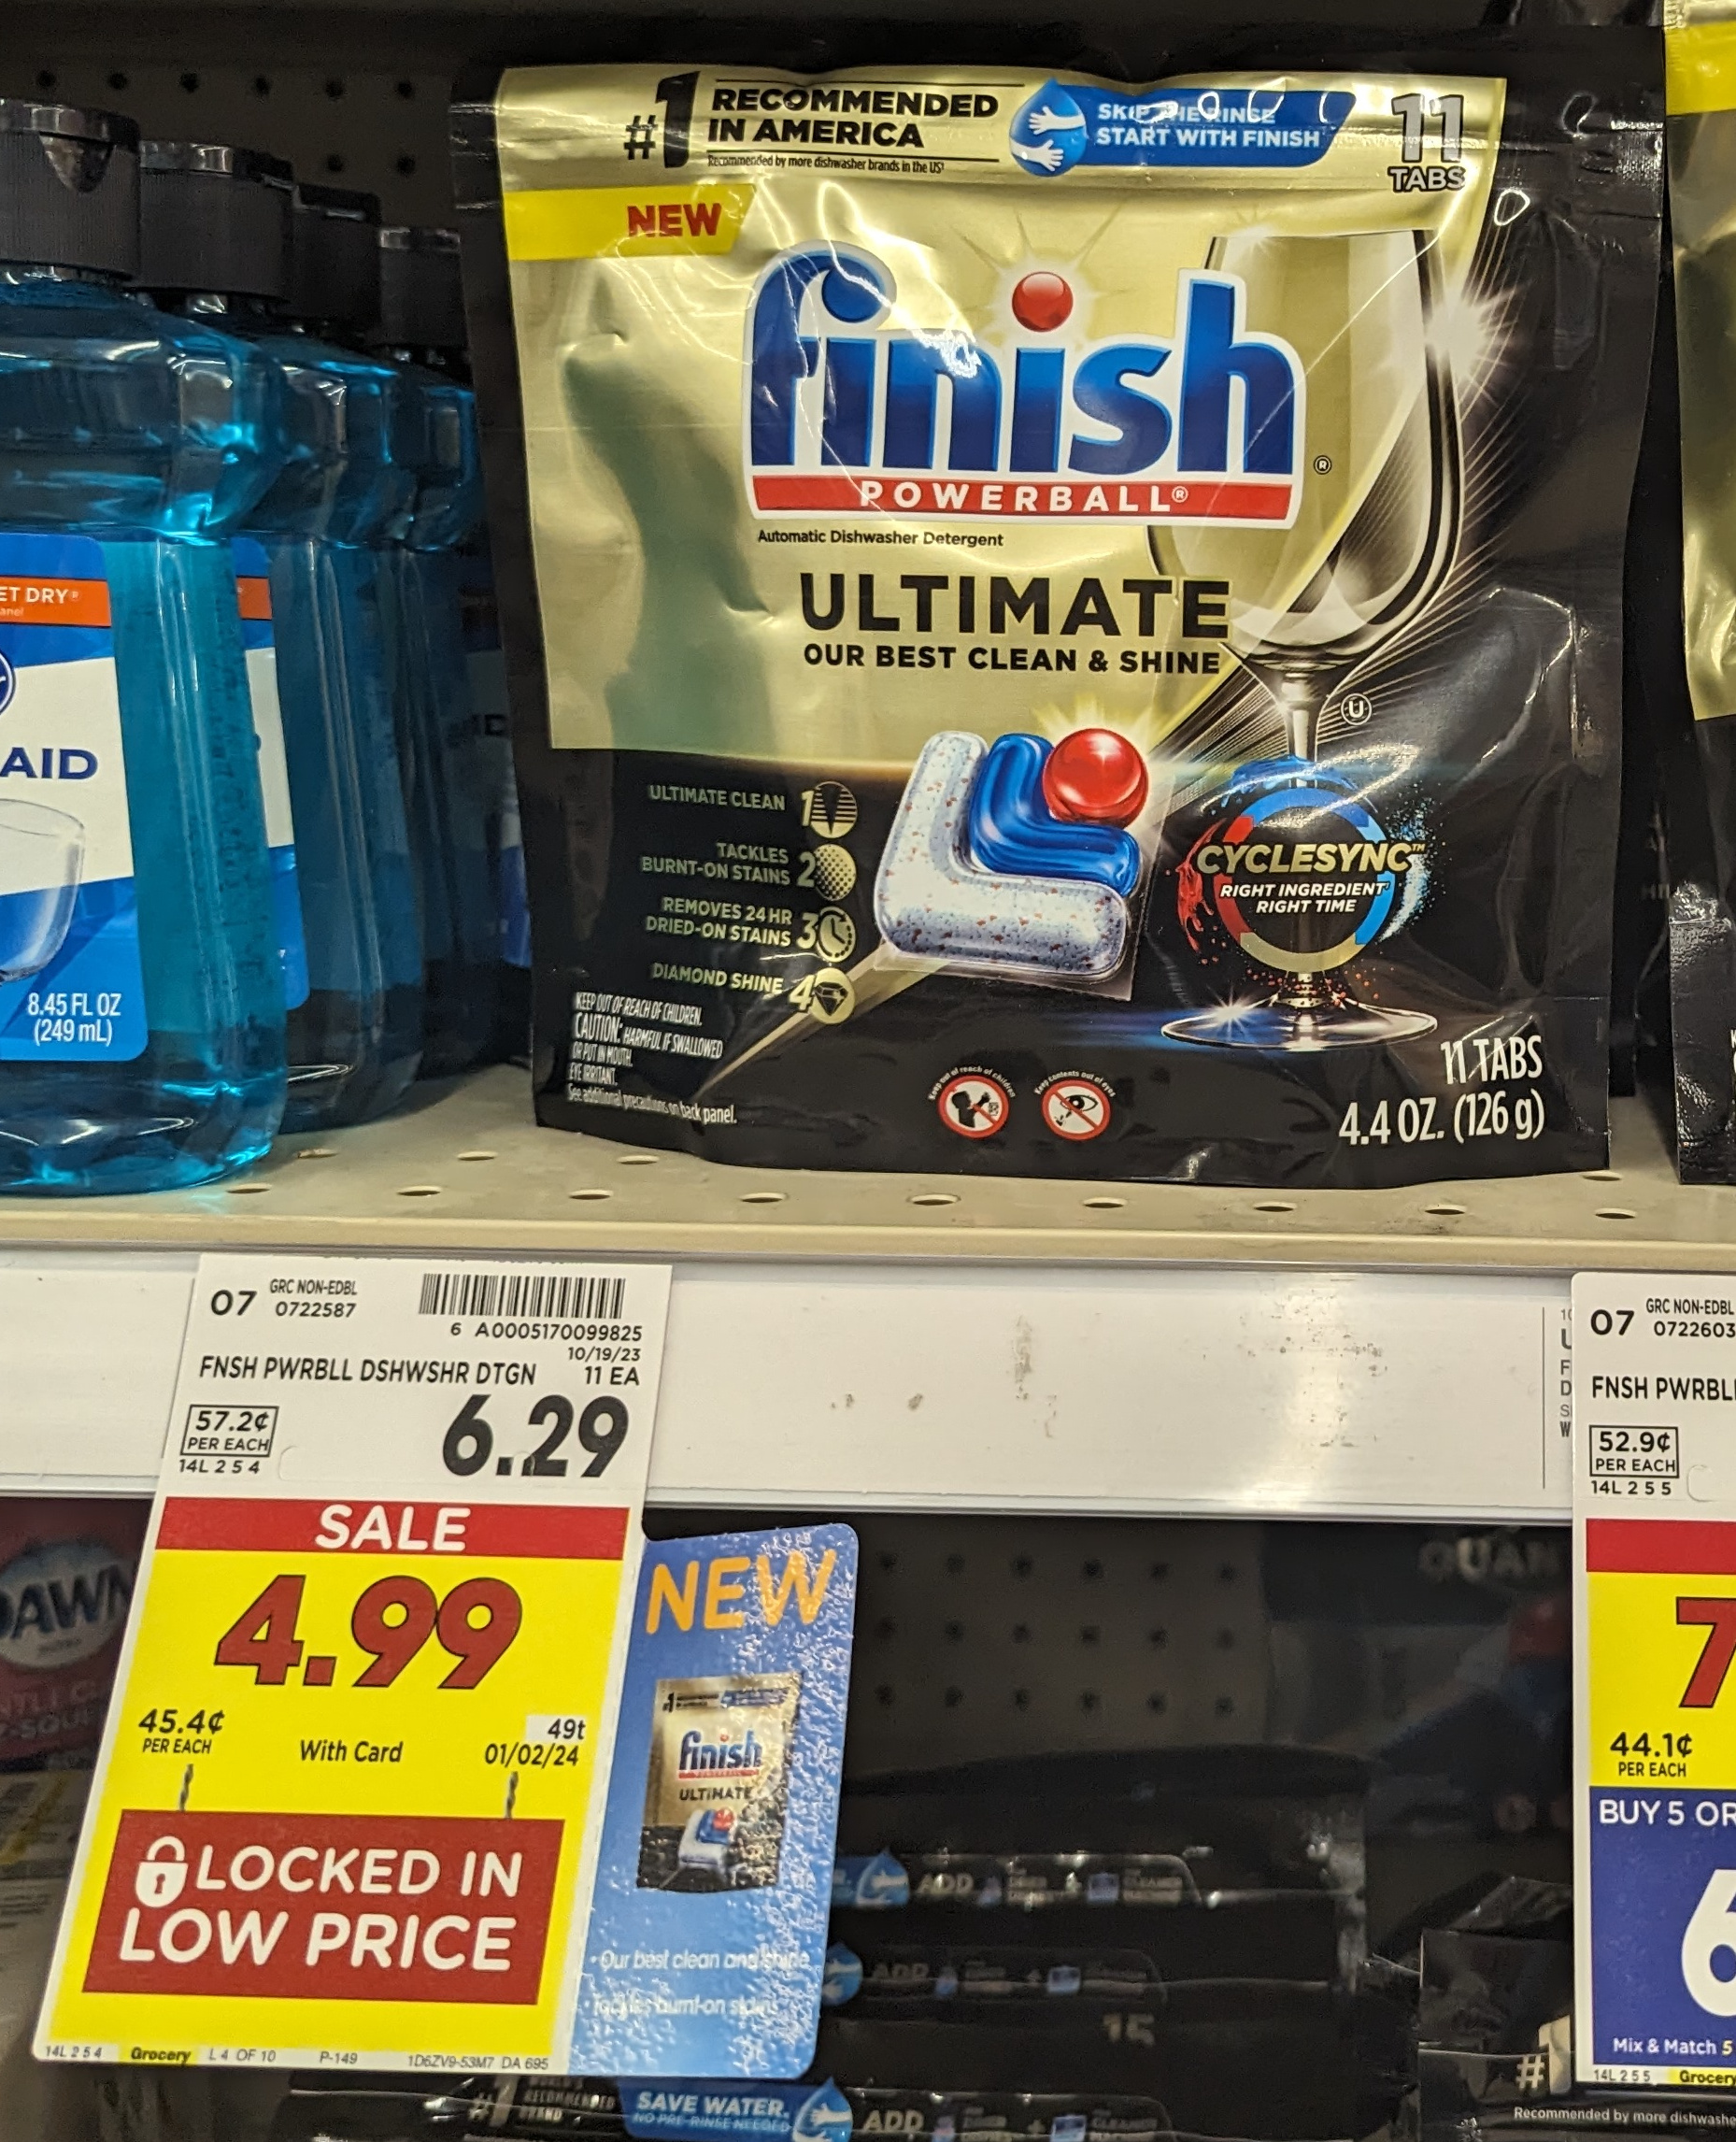 Finish Ultimate Detergent As Low As $1.99 At Kroger (Regular Price $6.29) -  iHeartKroger